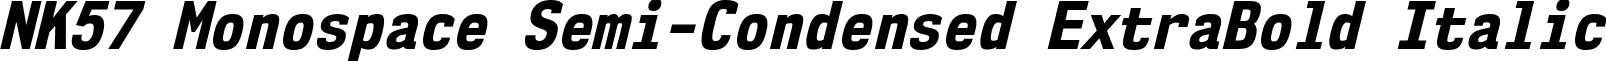 NK57 Monospace Semi-Condensed ExtraBold Italic font - nk57-monospace.semi-condensed-extrabold-italic.ttf